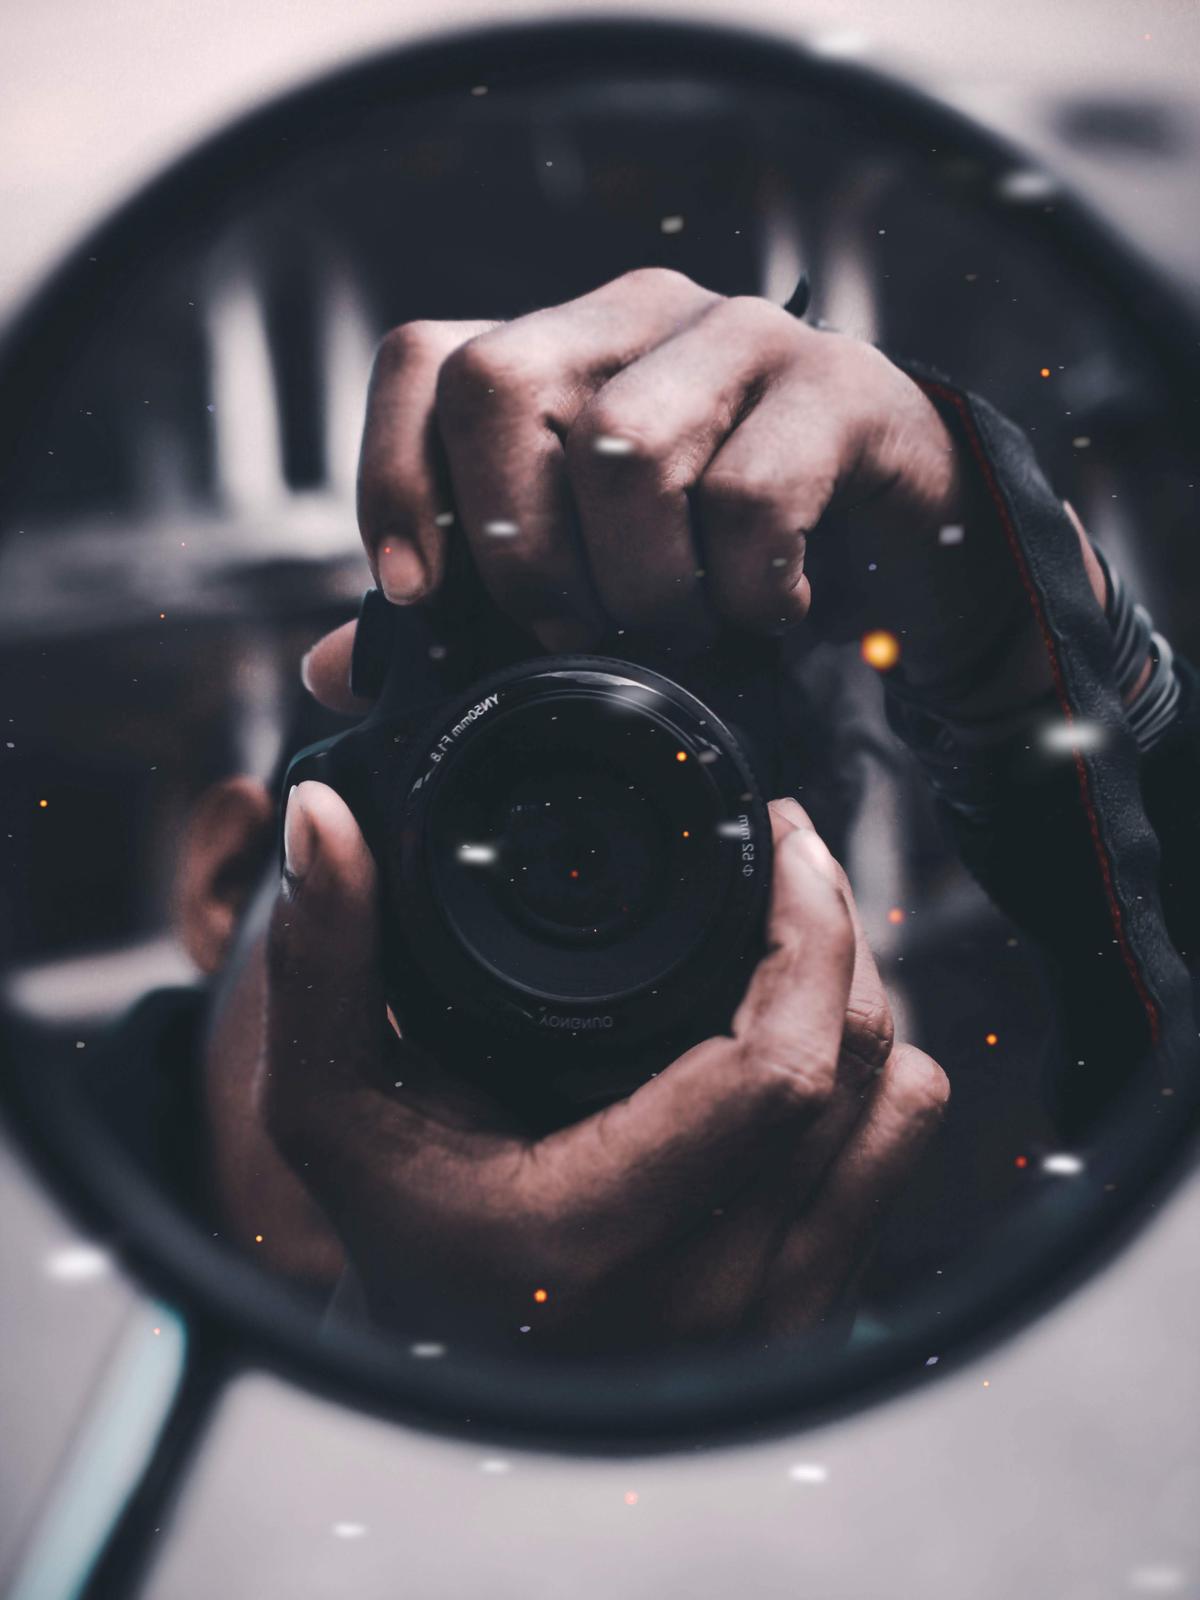 High-quality image of Adorama cameras showcasing their advanced features and versatility